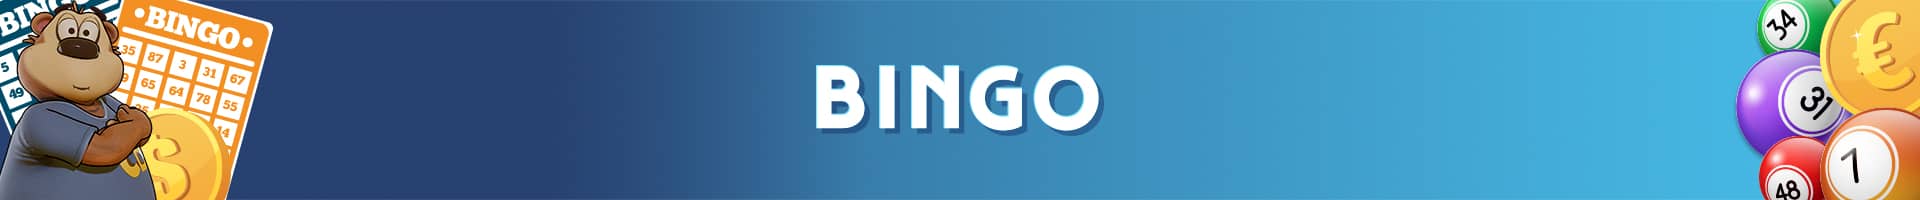 Bingo Page Banner 